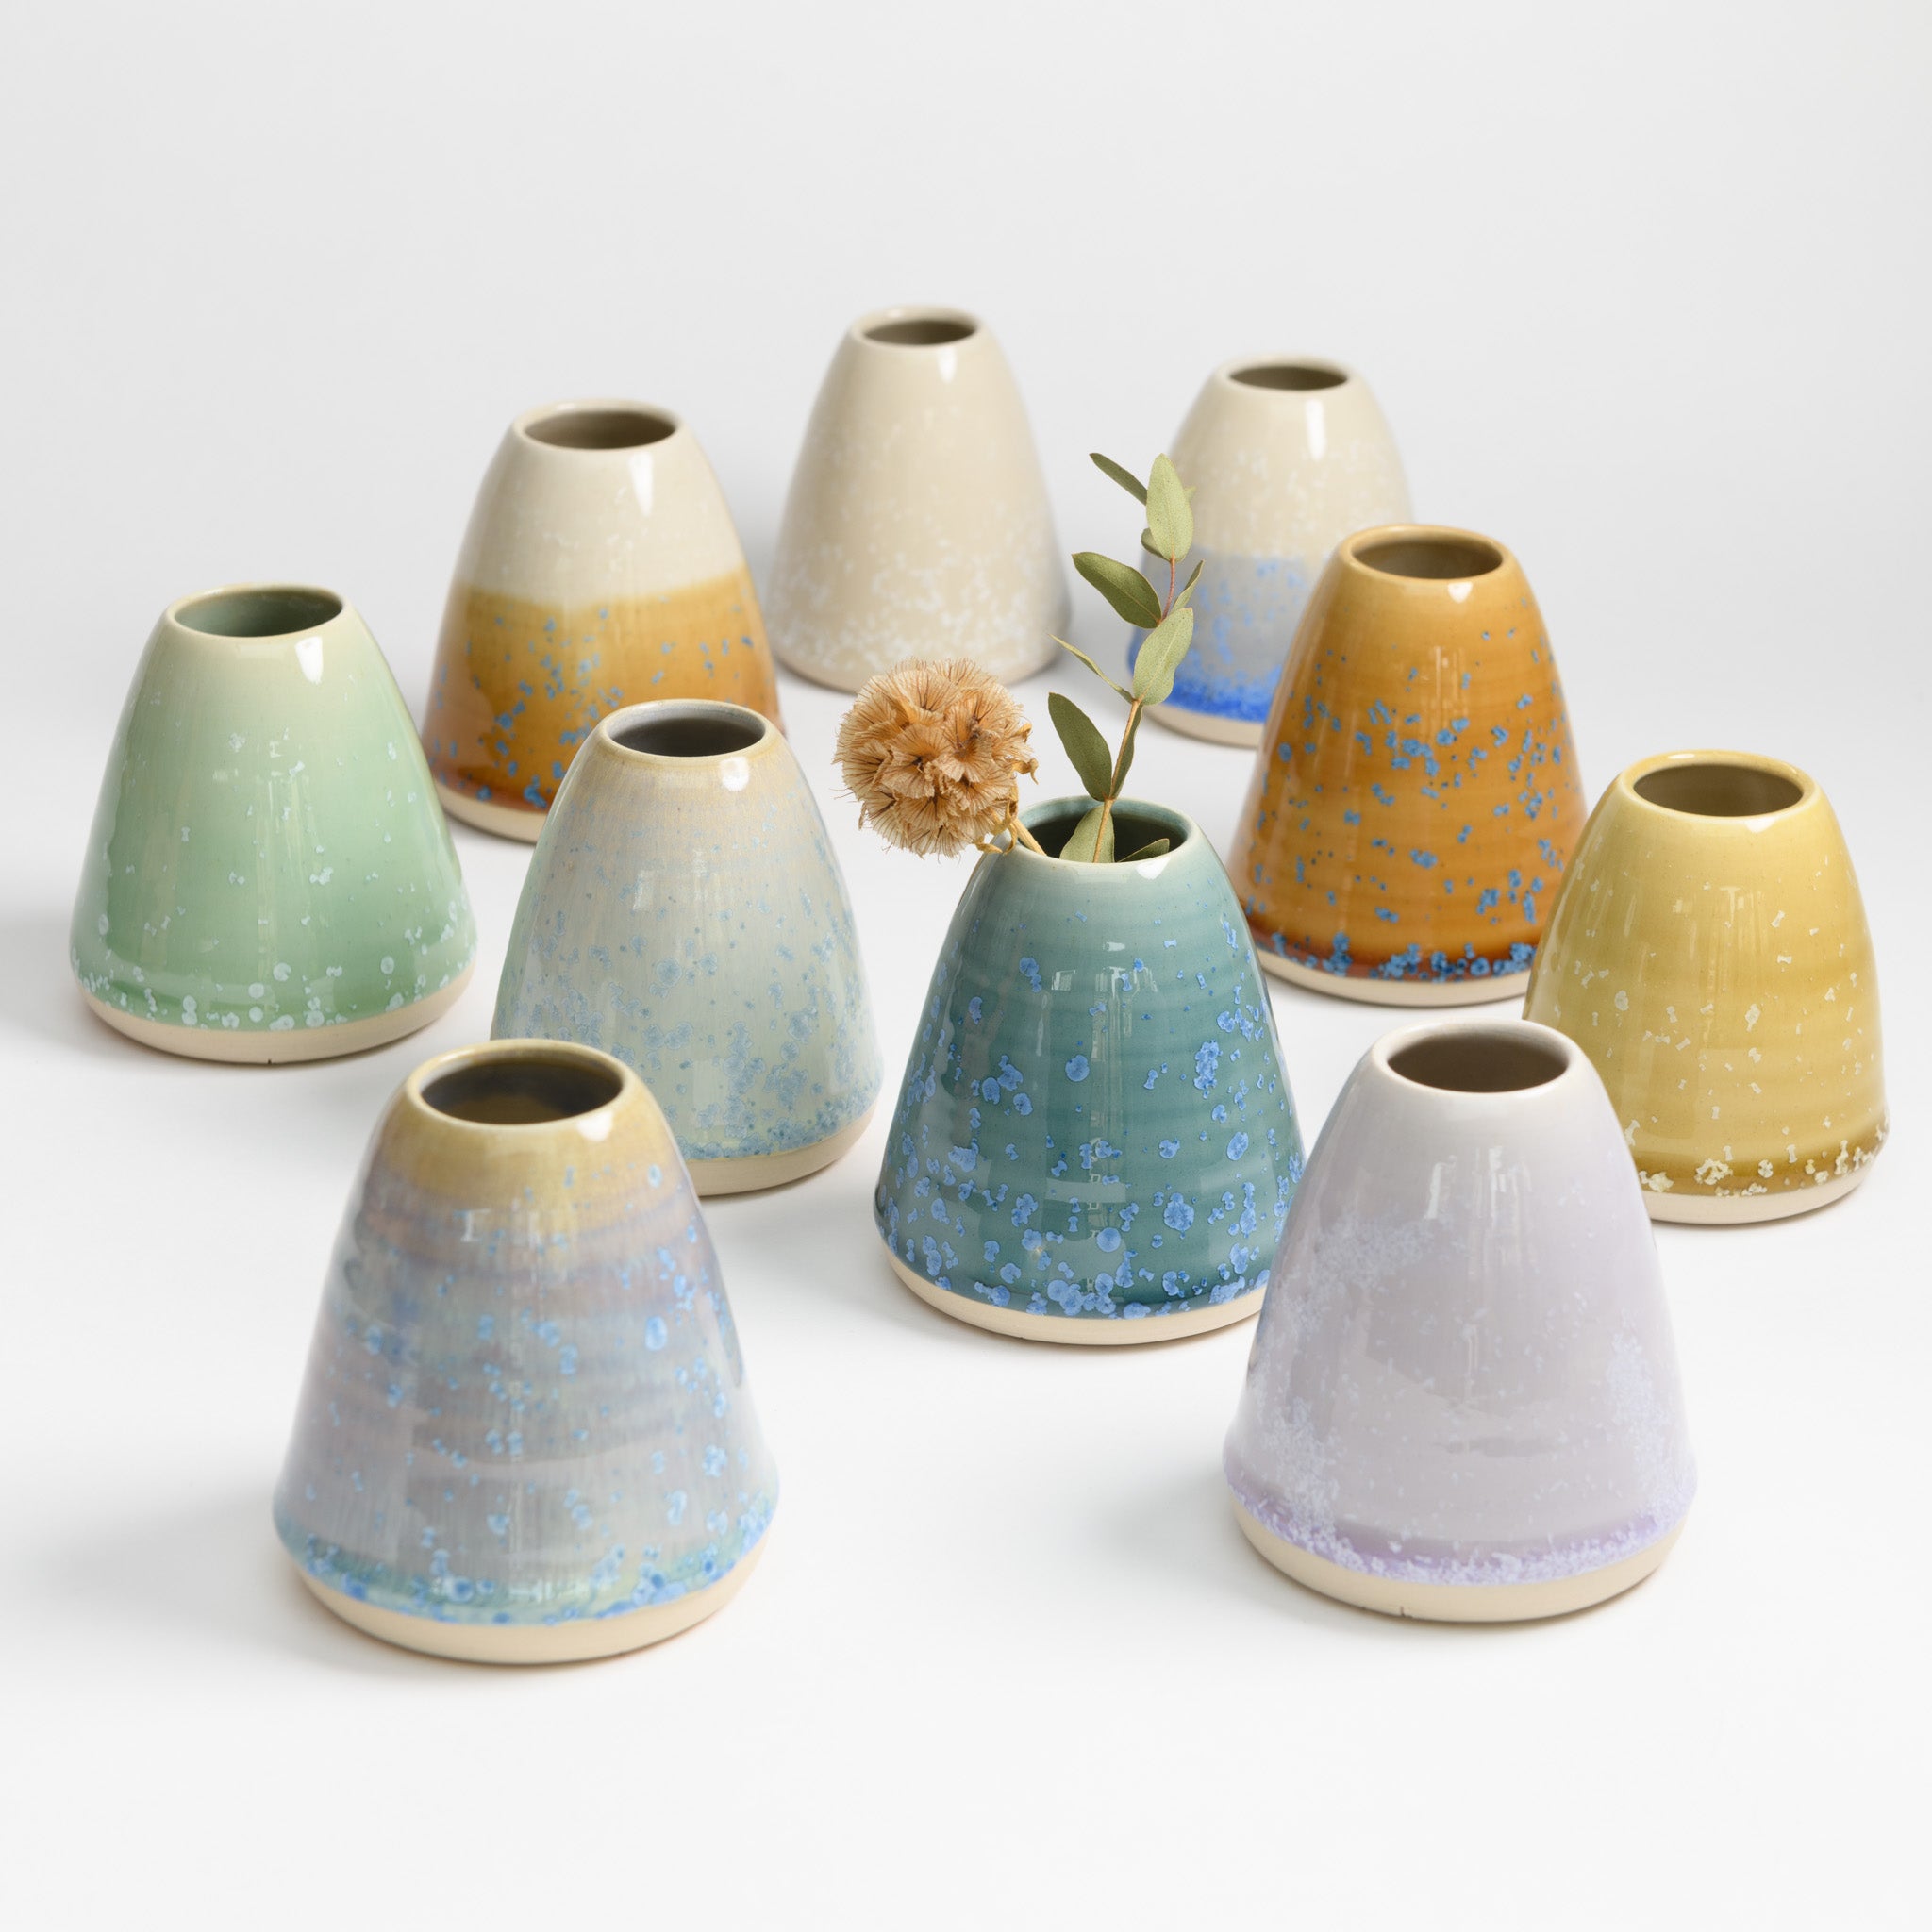 Colourful handmade pretty ceramic bud vases